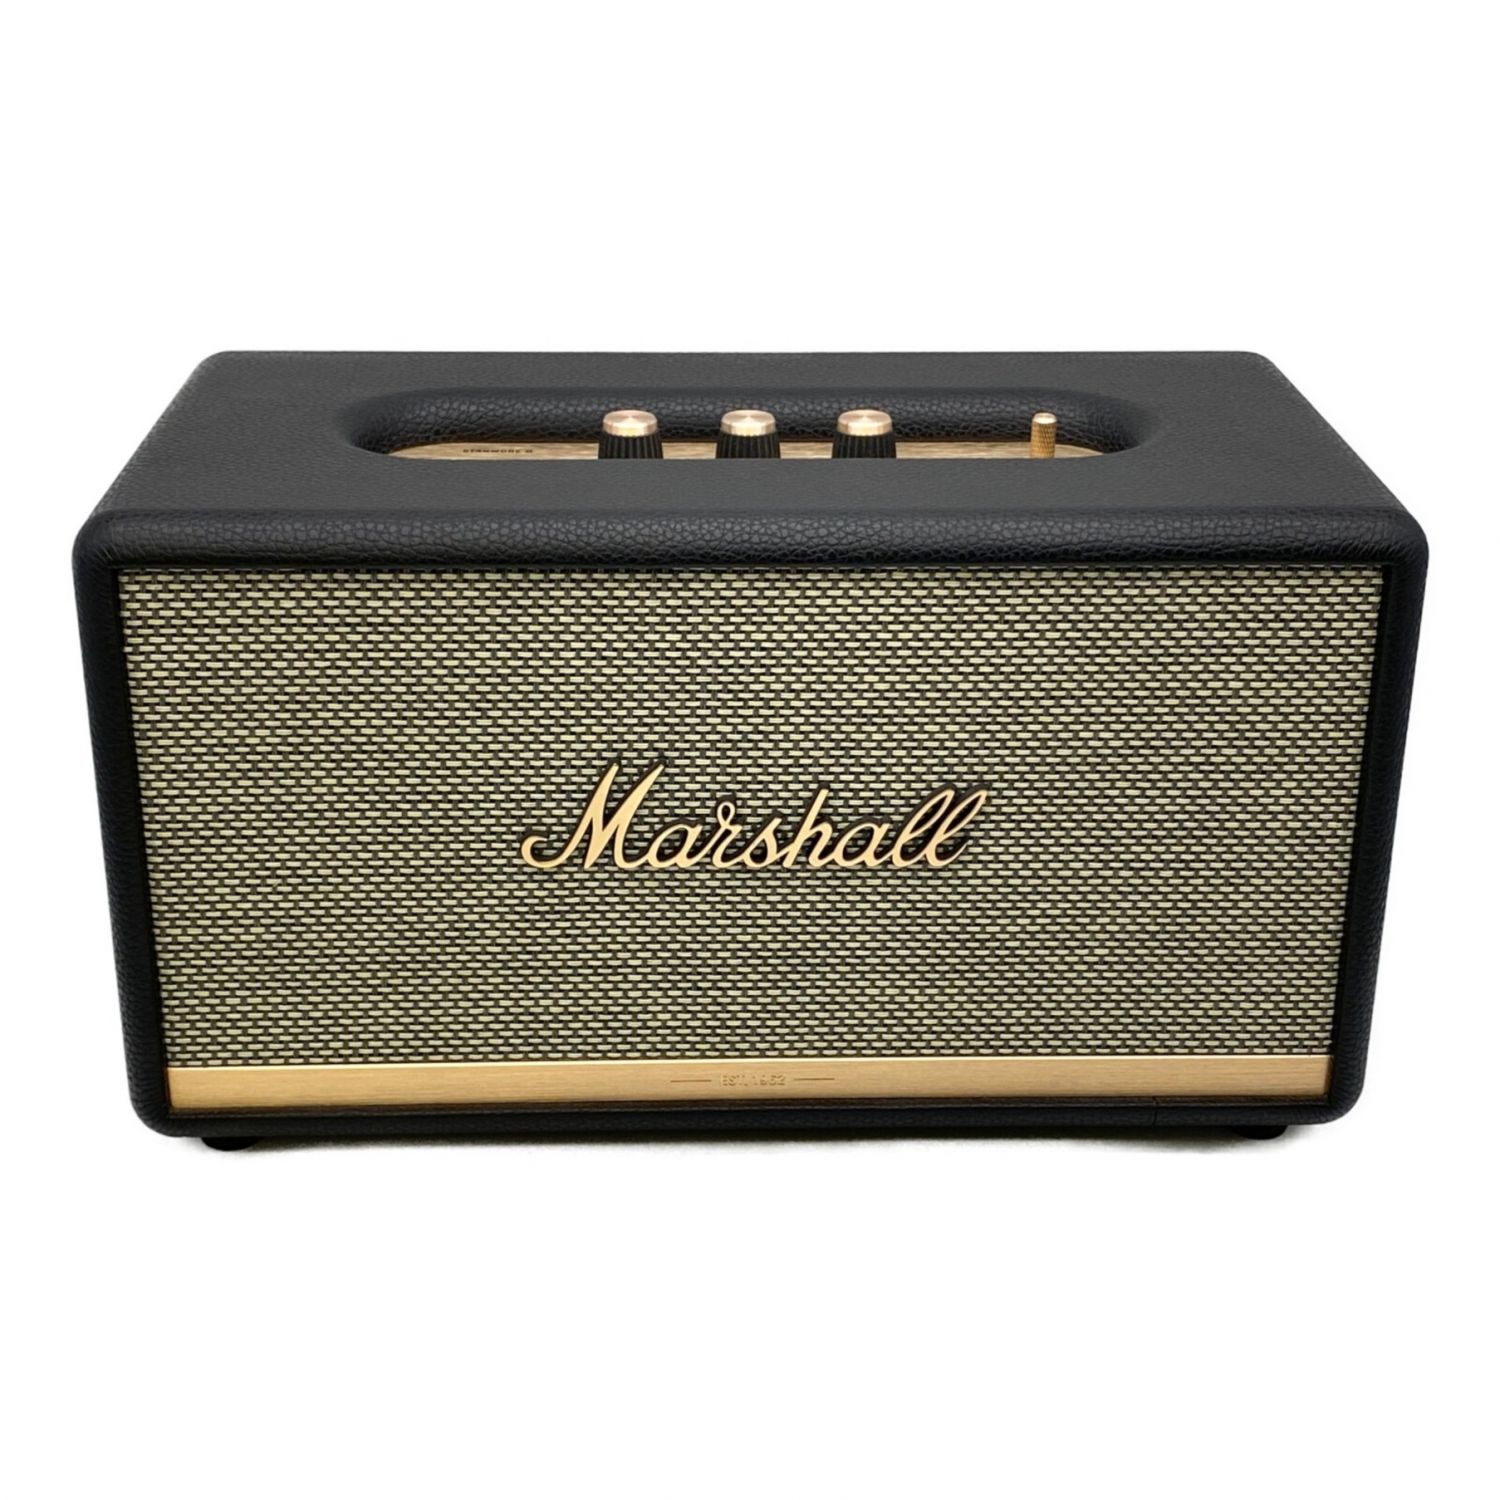 Marshall Stanmore II Bluetooth スピーカー - オーディオ機器